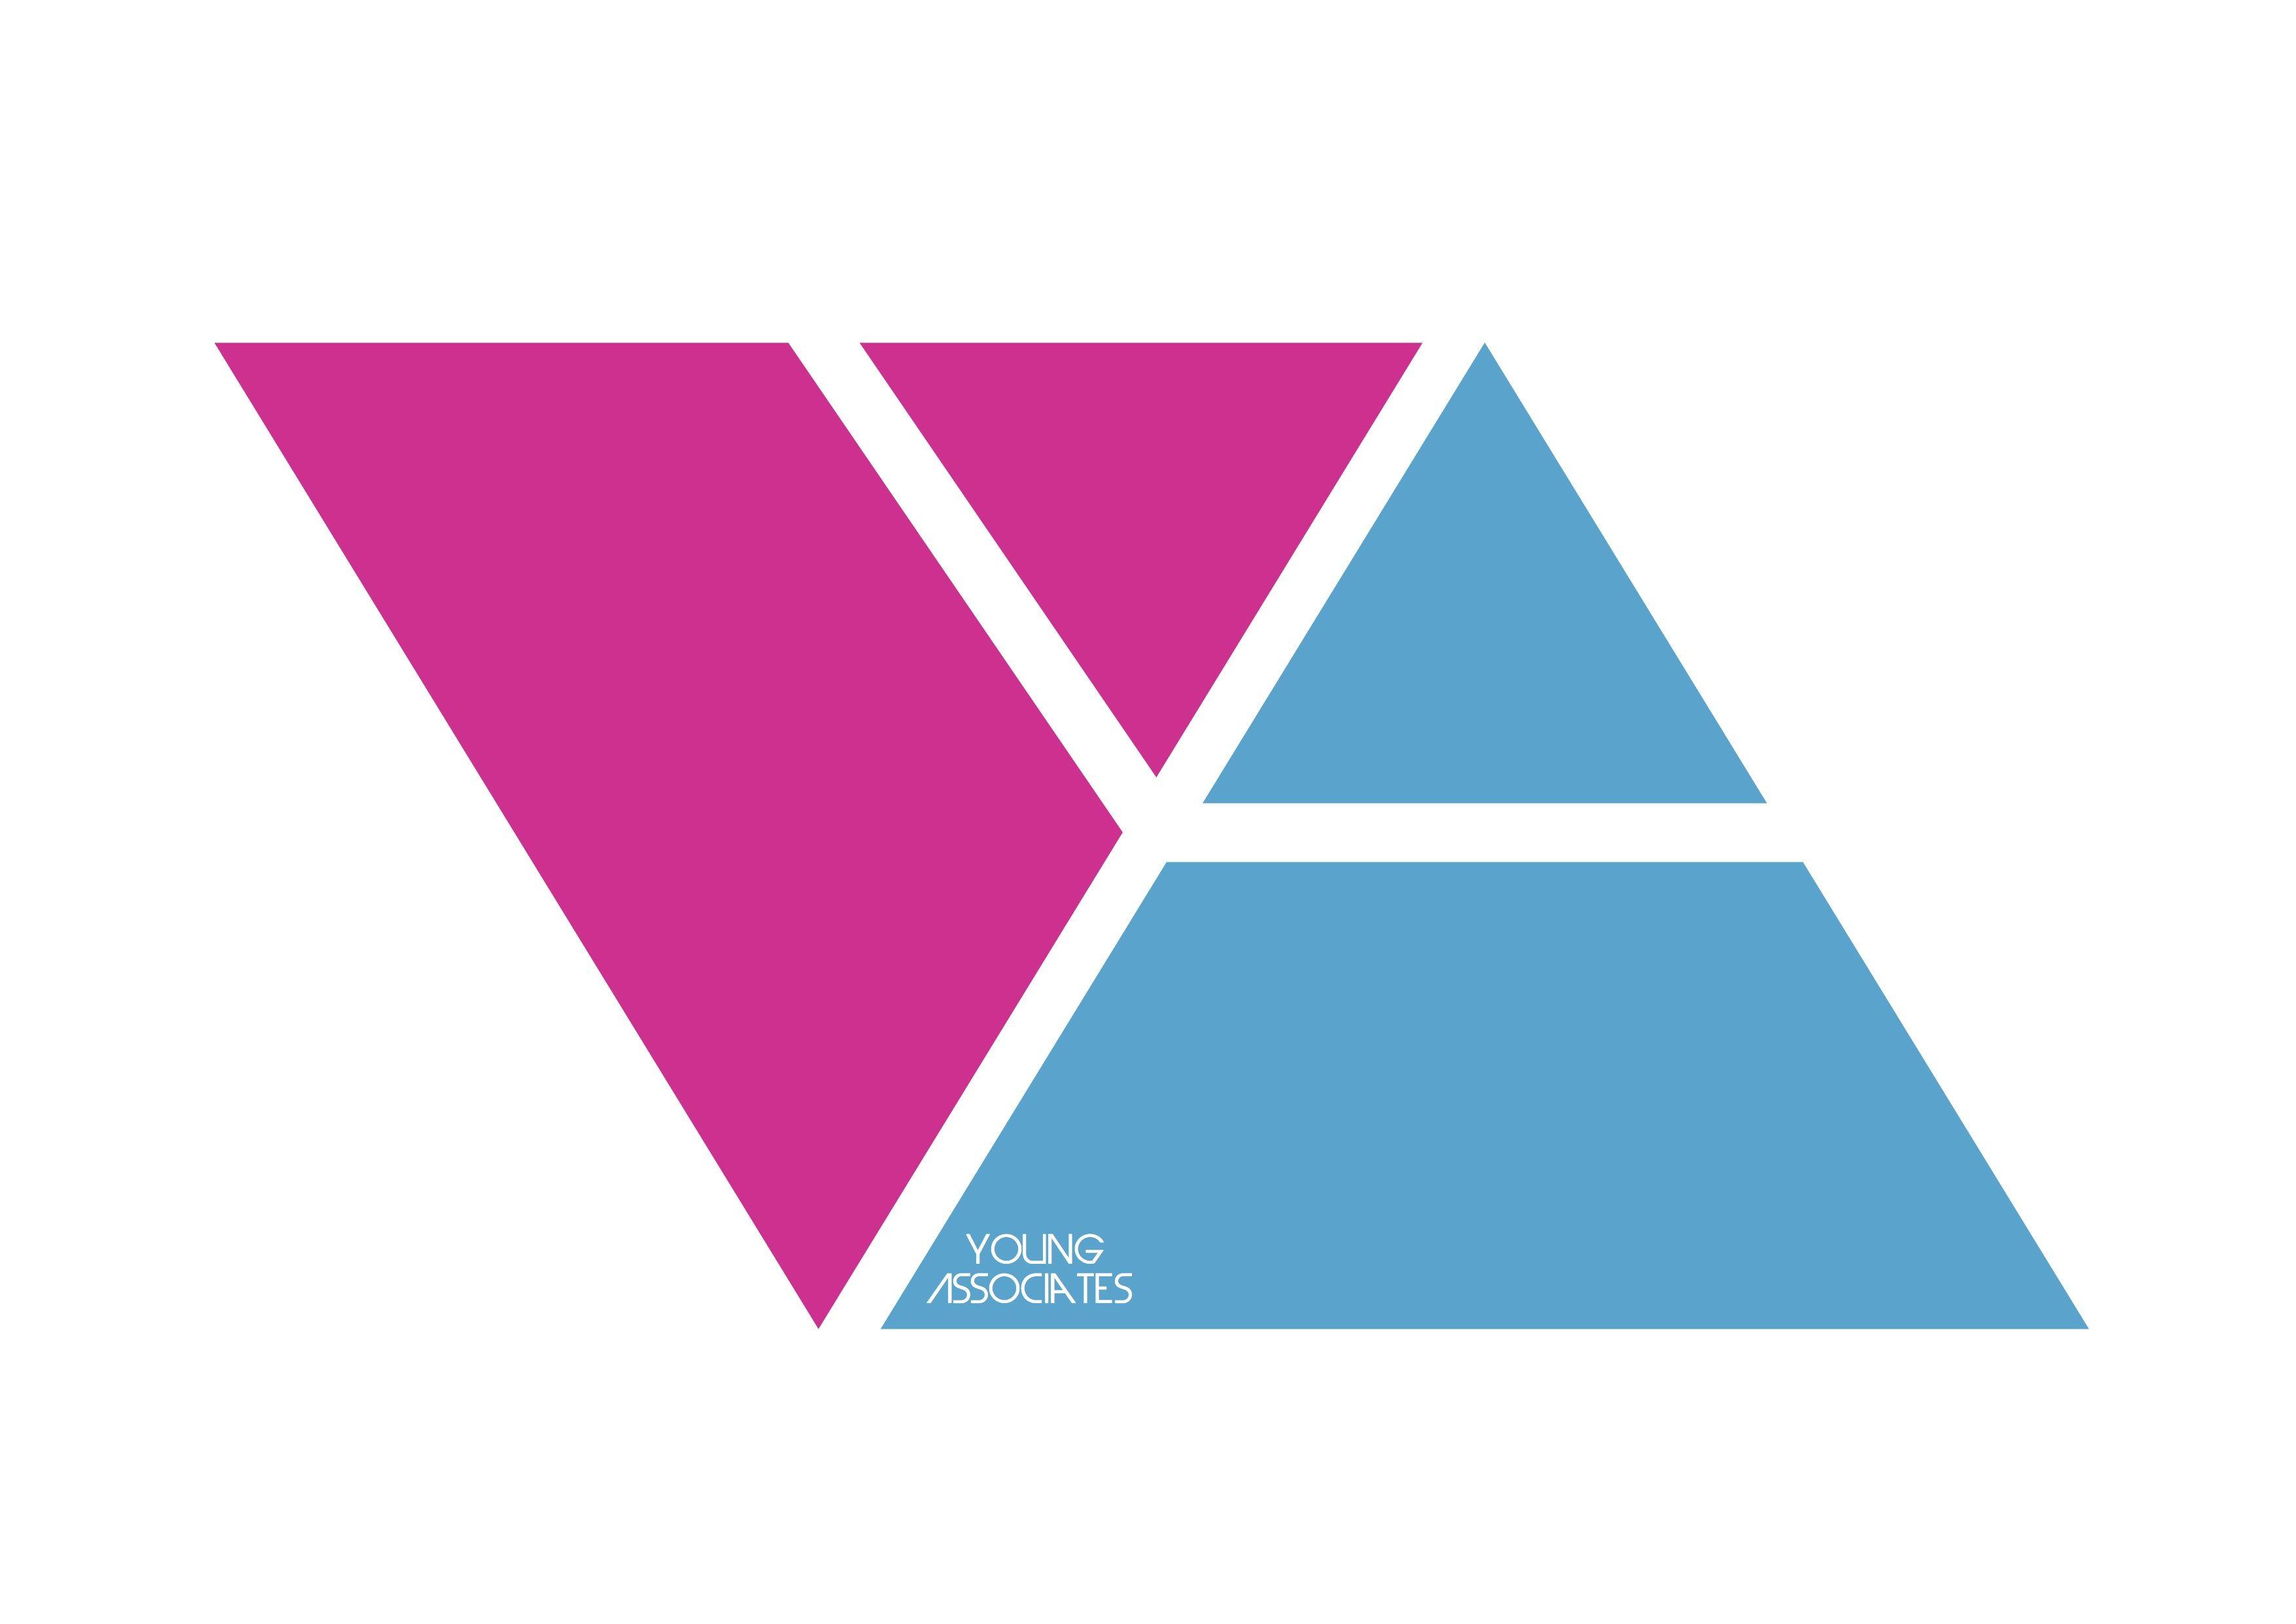 Two Triangle Logo - Young Associates logo_ | alexkozobolis